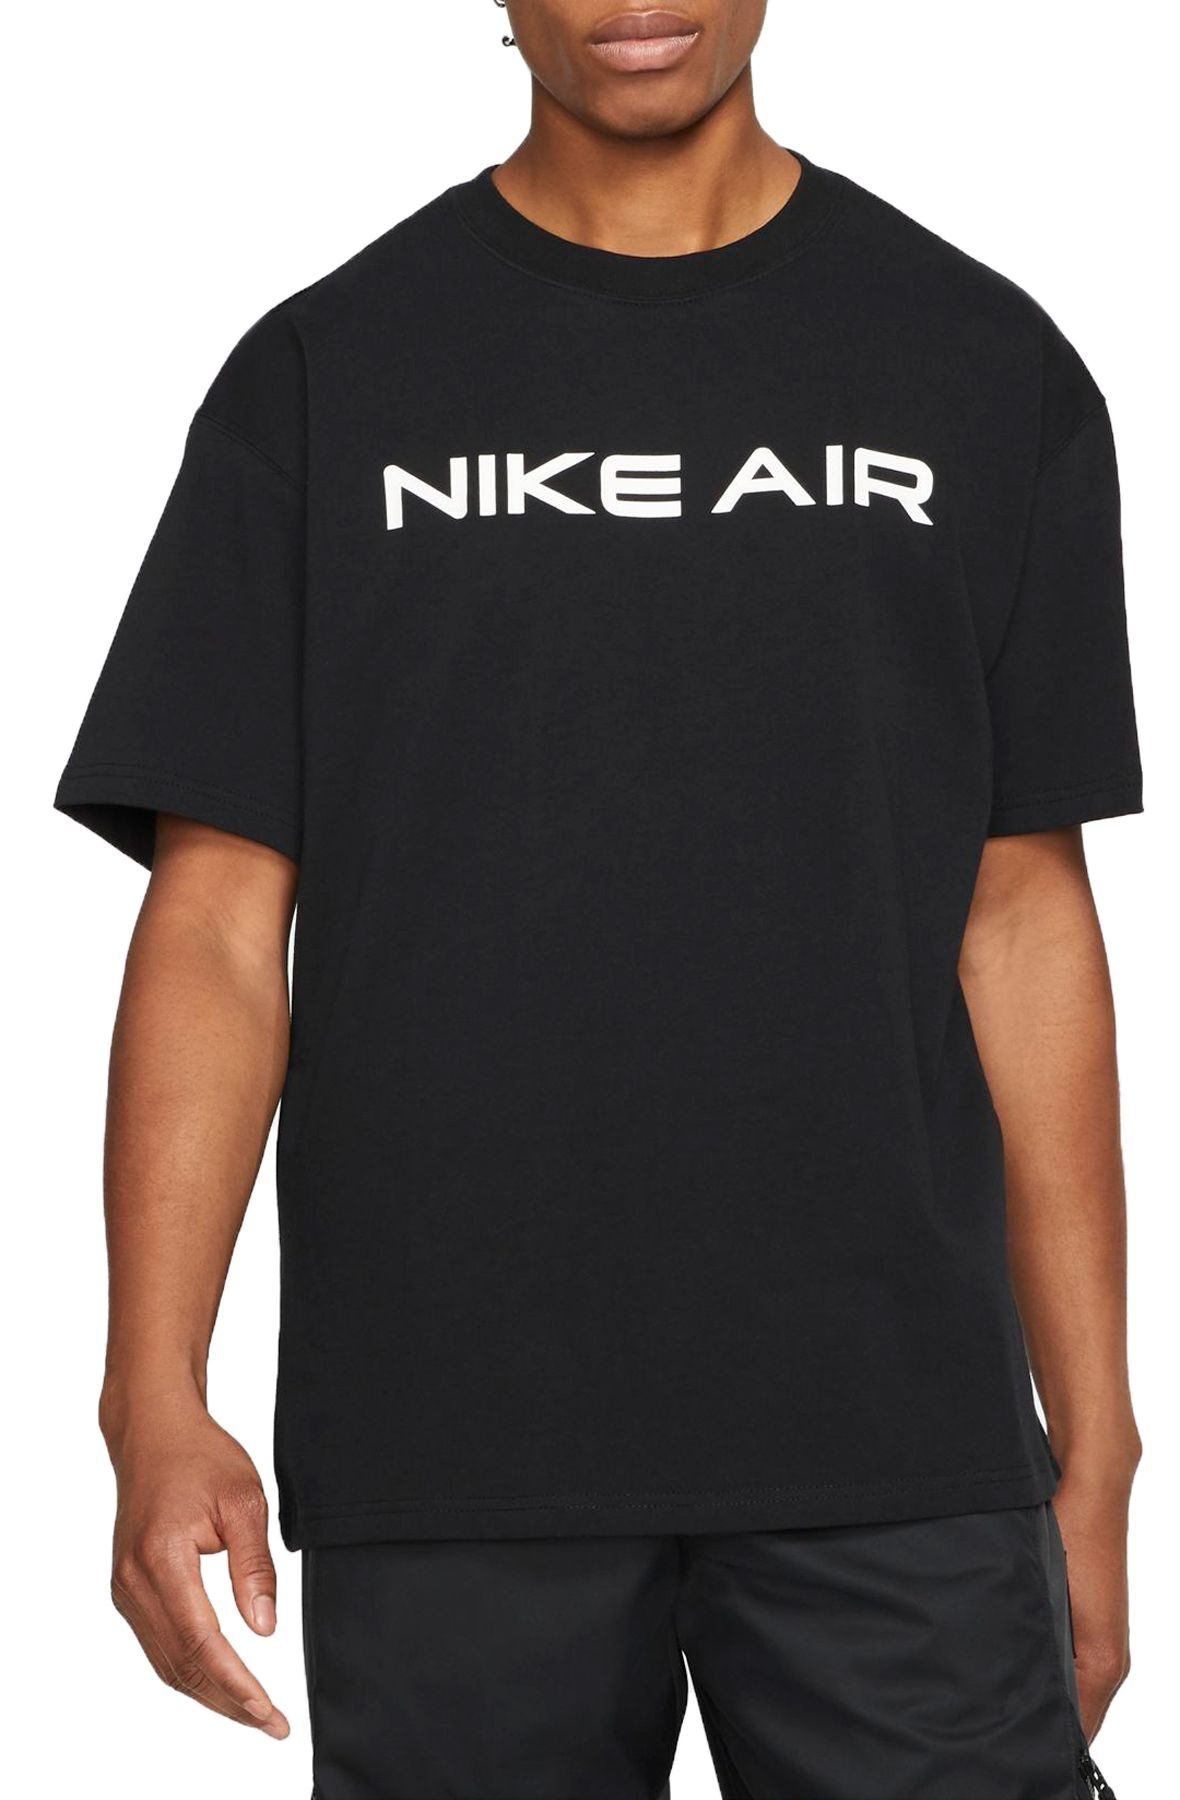 Nike Air Graphic T-Shirt in Black